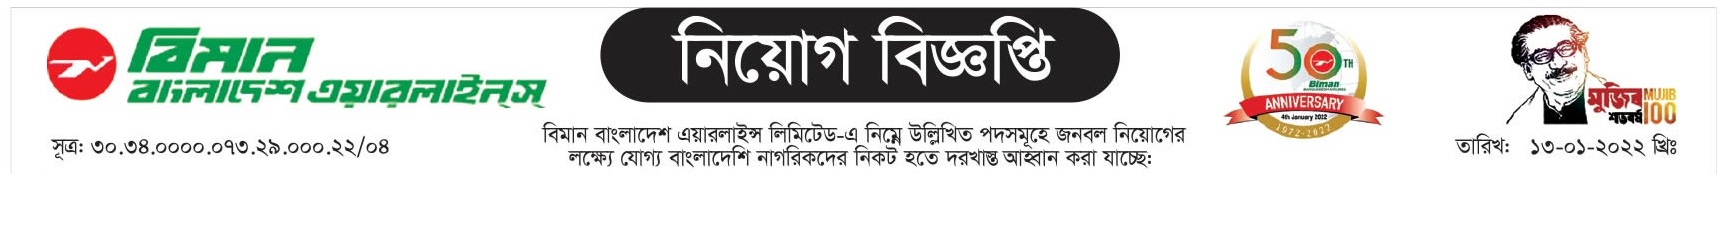 Biman Bangladesh Airlines Job Circularo